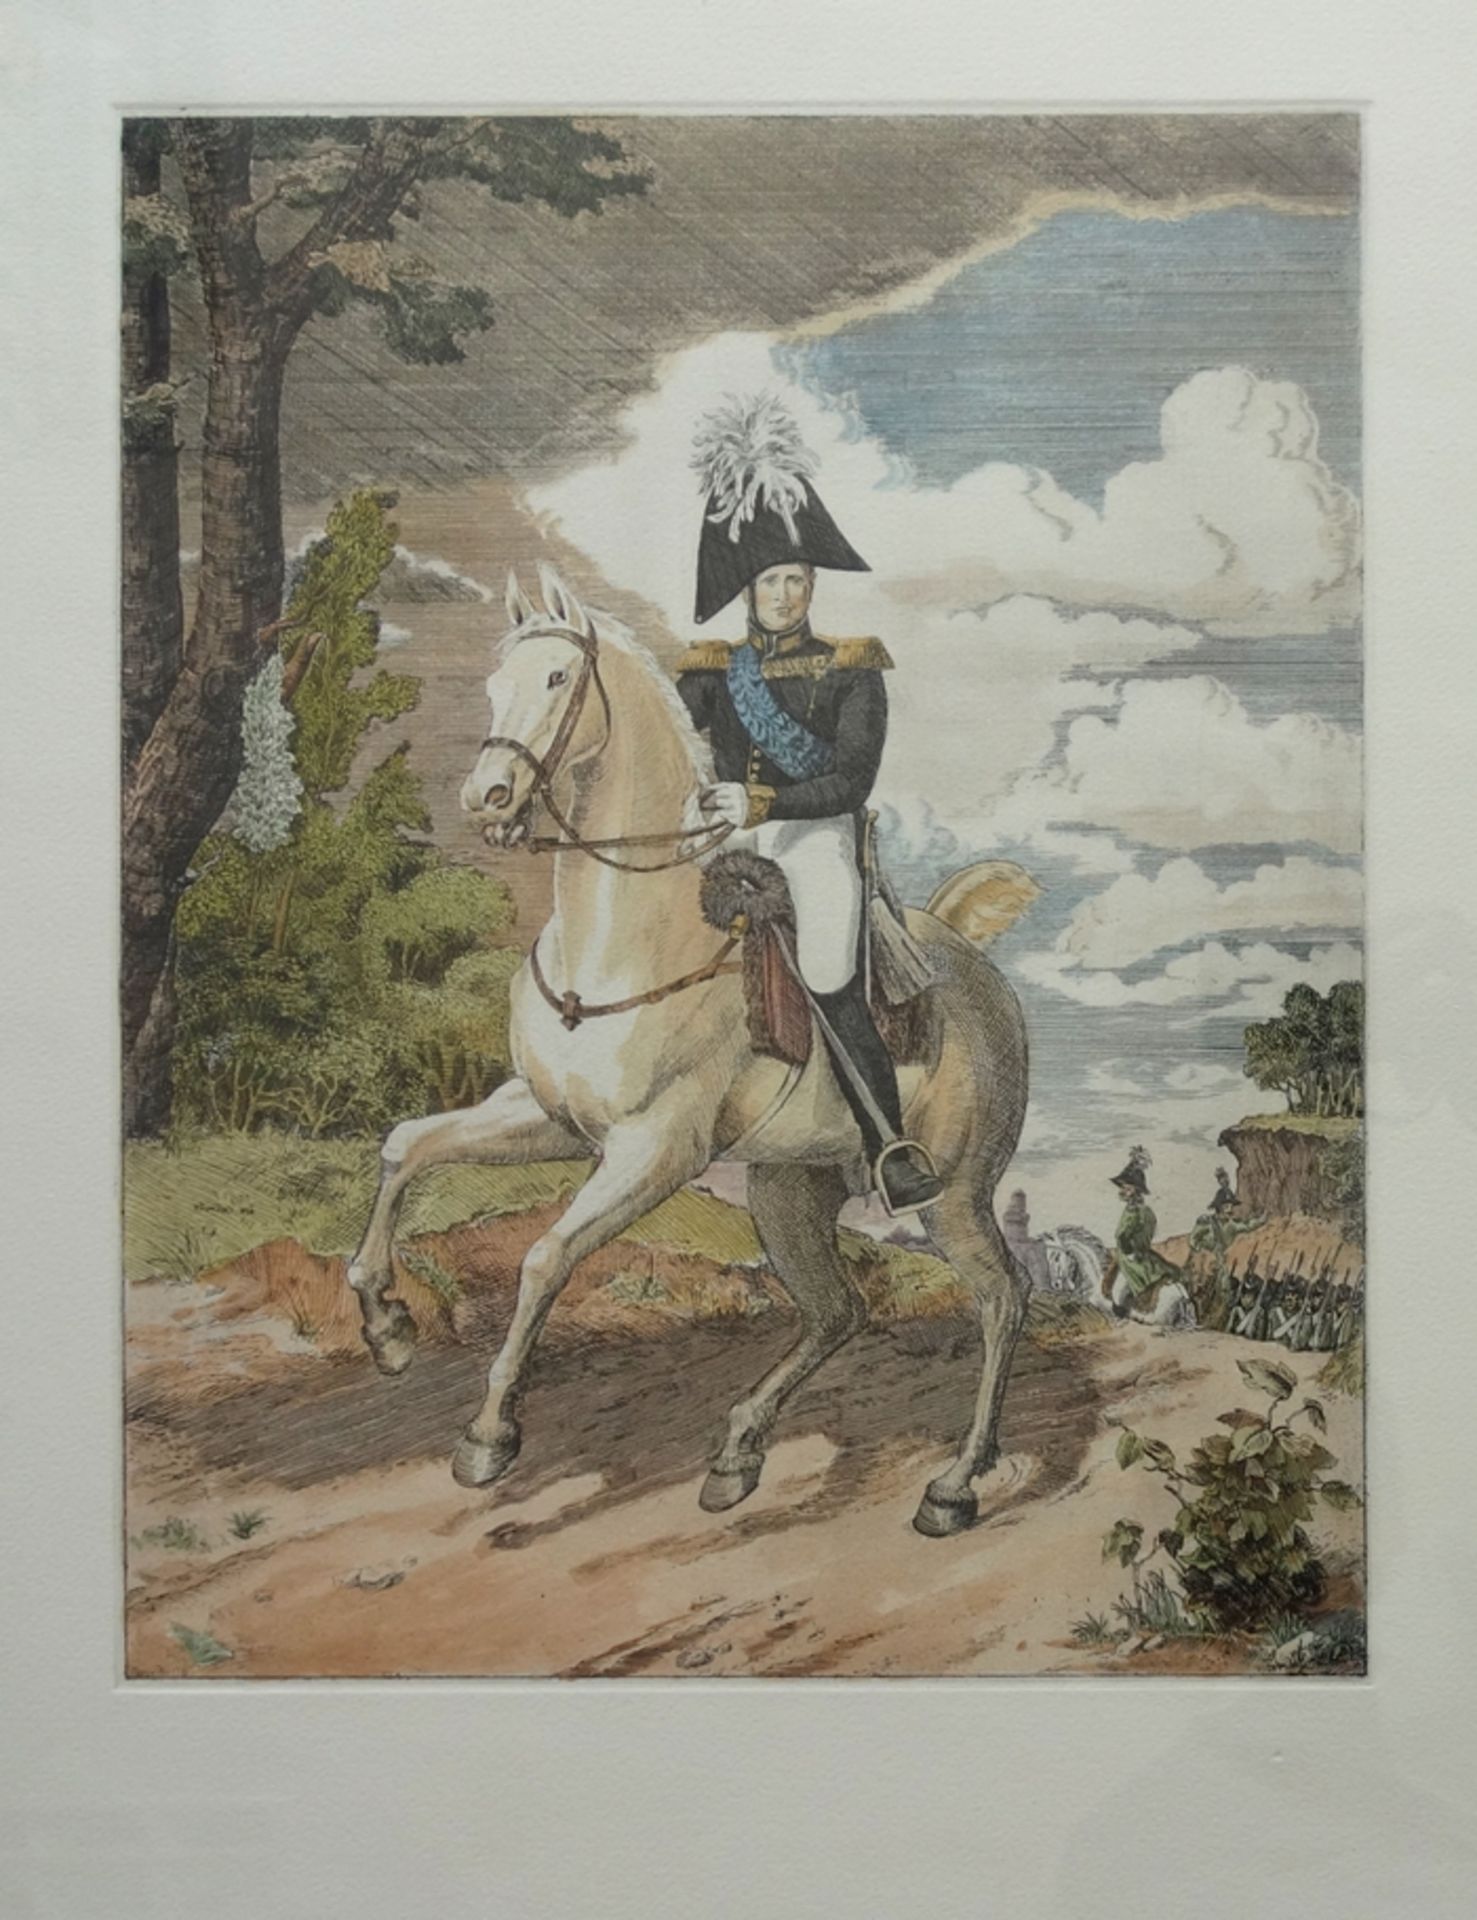 P. W. Pichugin, "Equestrian Portrait of Alexander I", 2nd half of 20th cent.